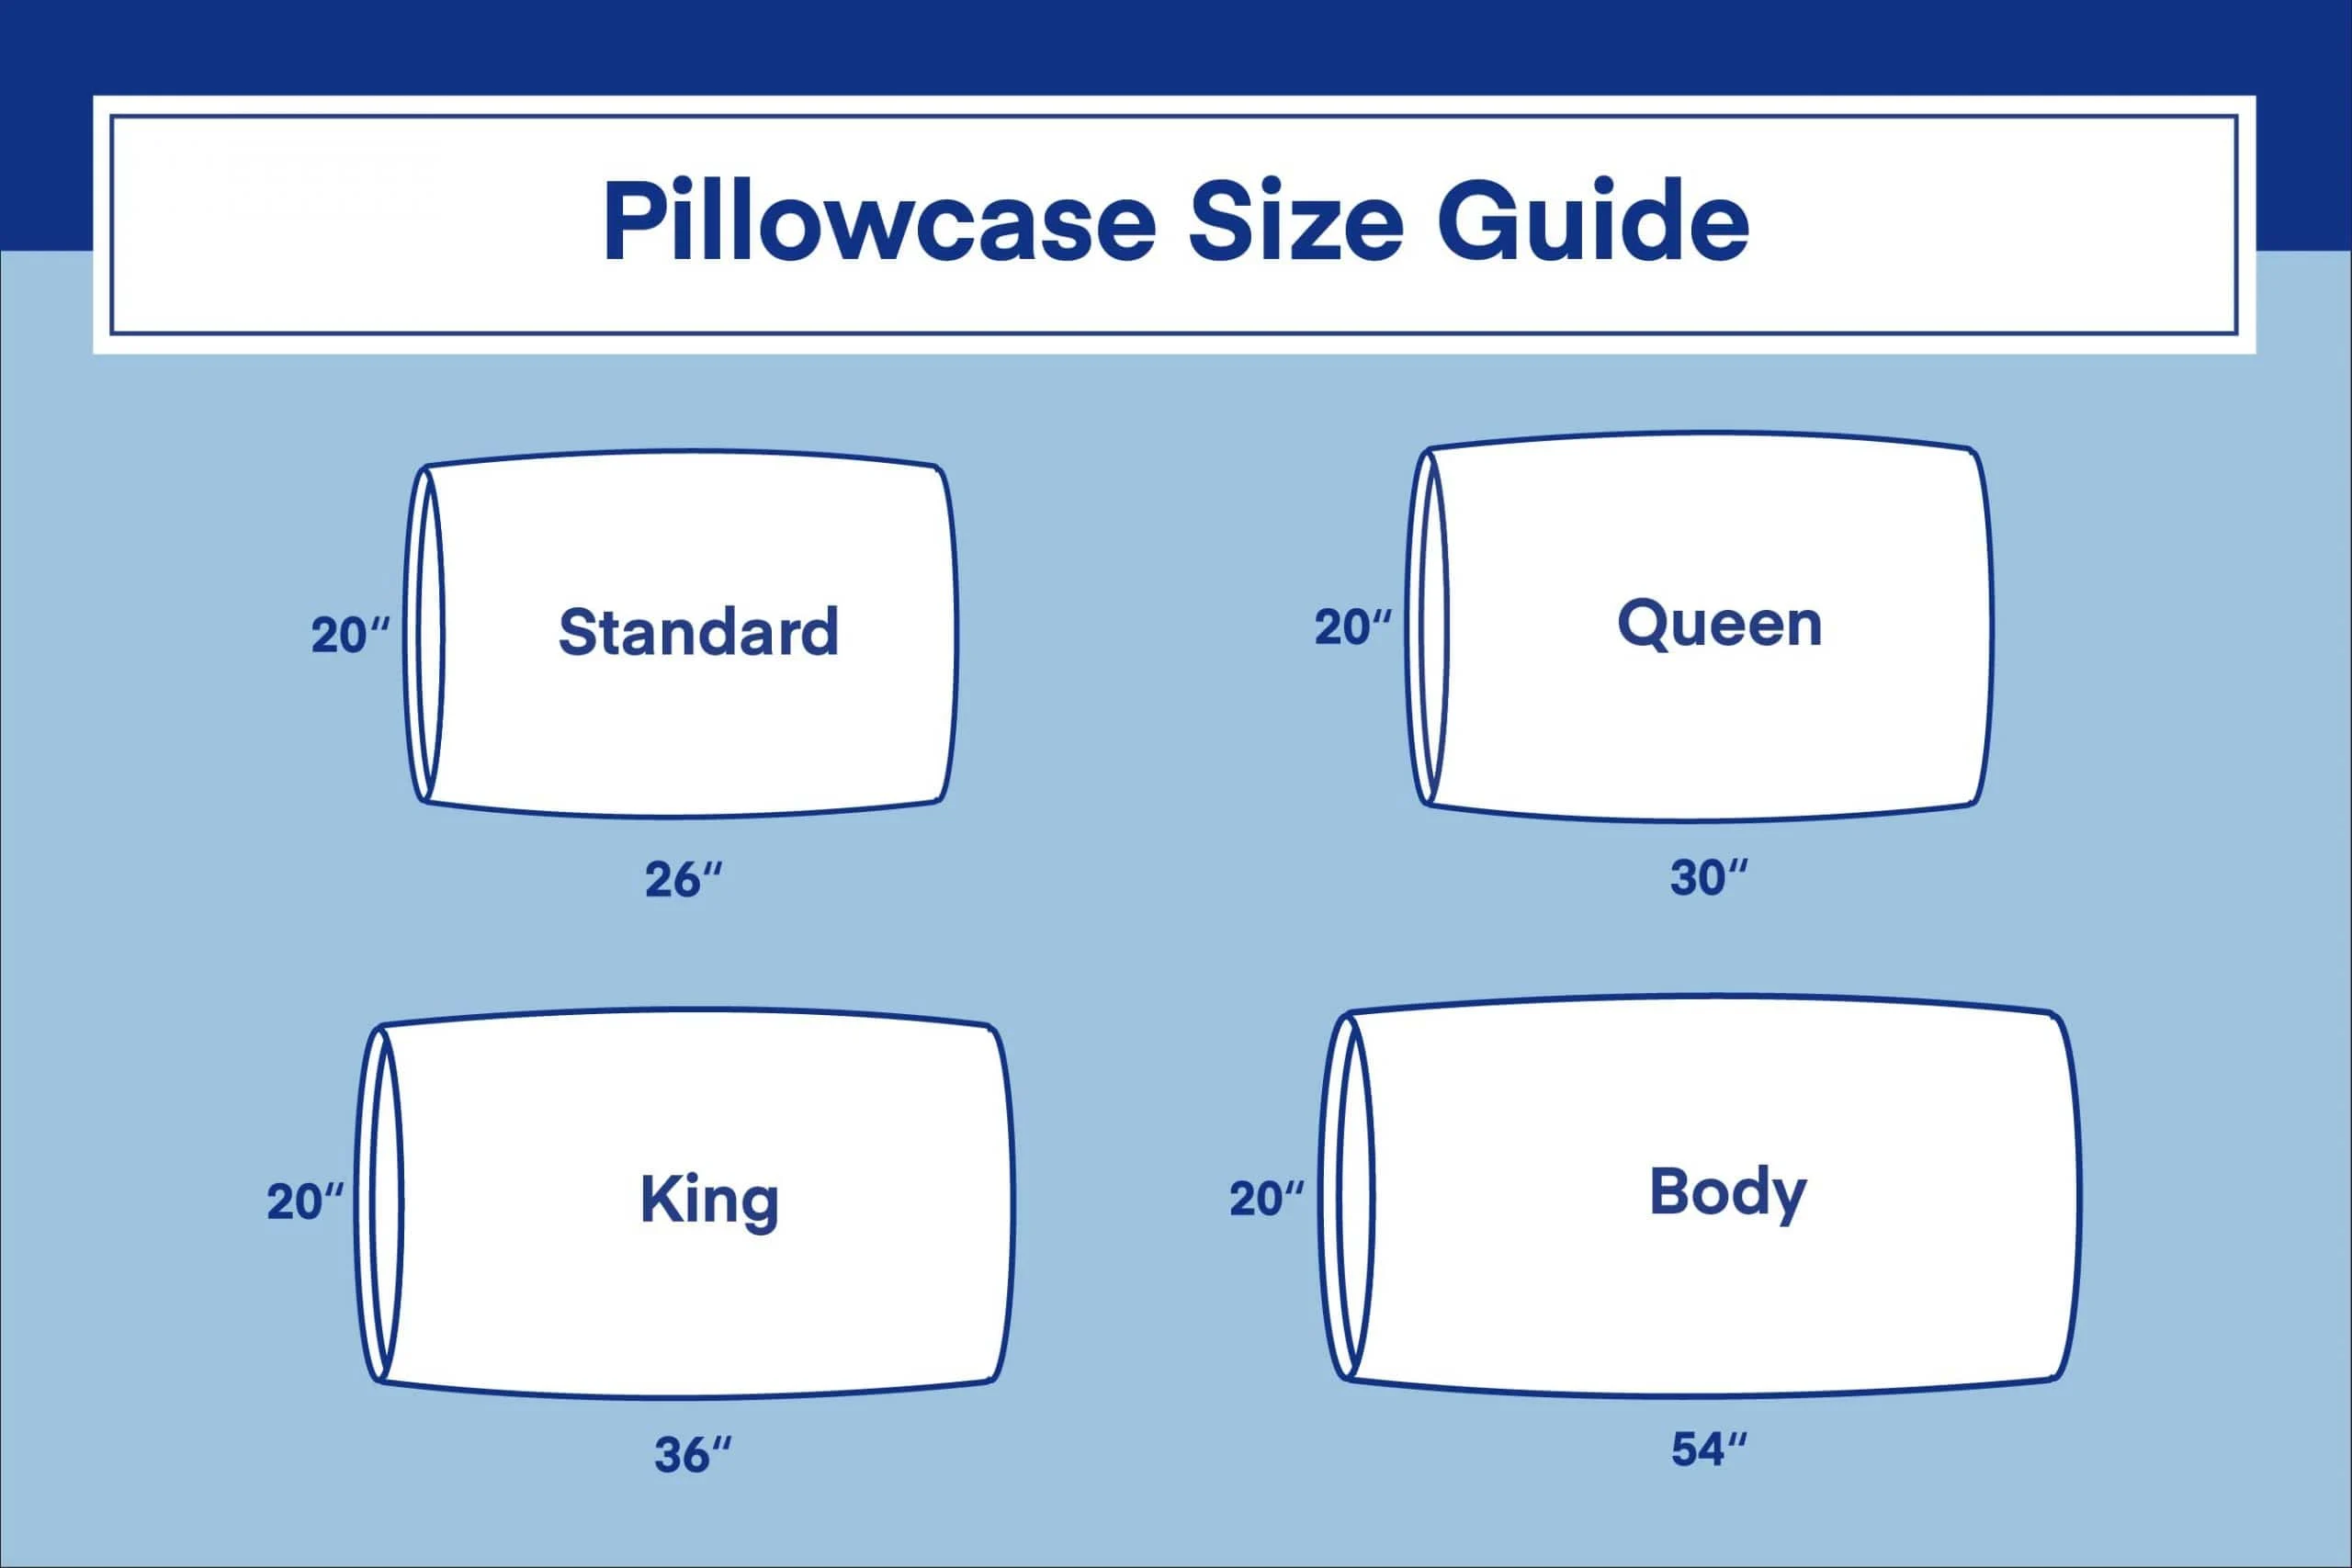 Pillowcase sizes guide